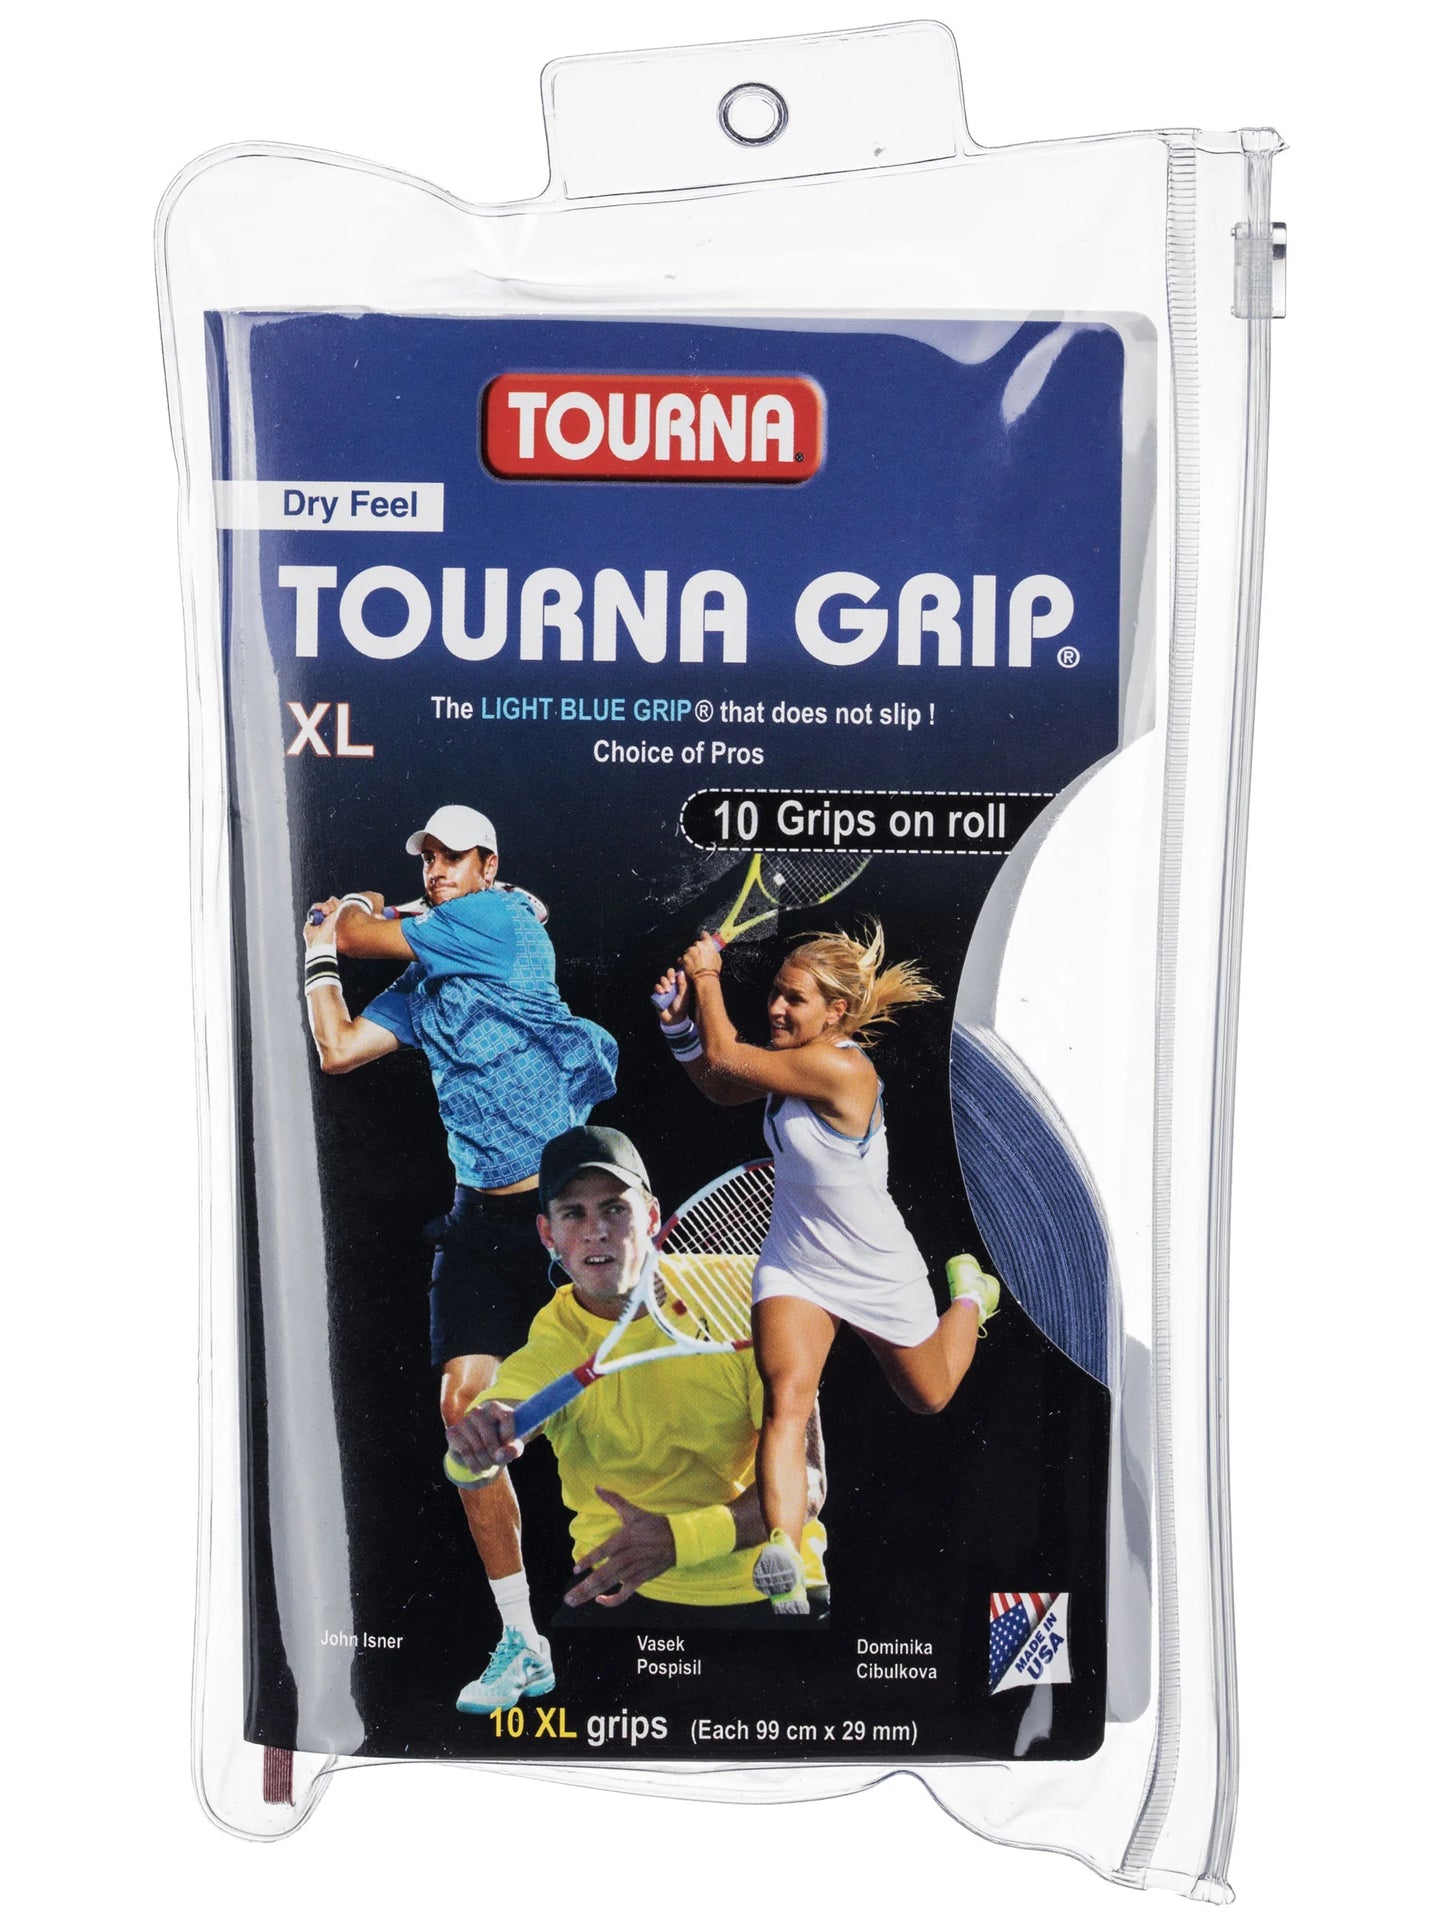 Tourna Grip Original XL Overgrip - 10 Grip Reel